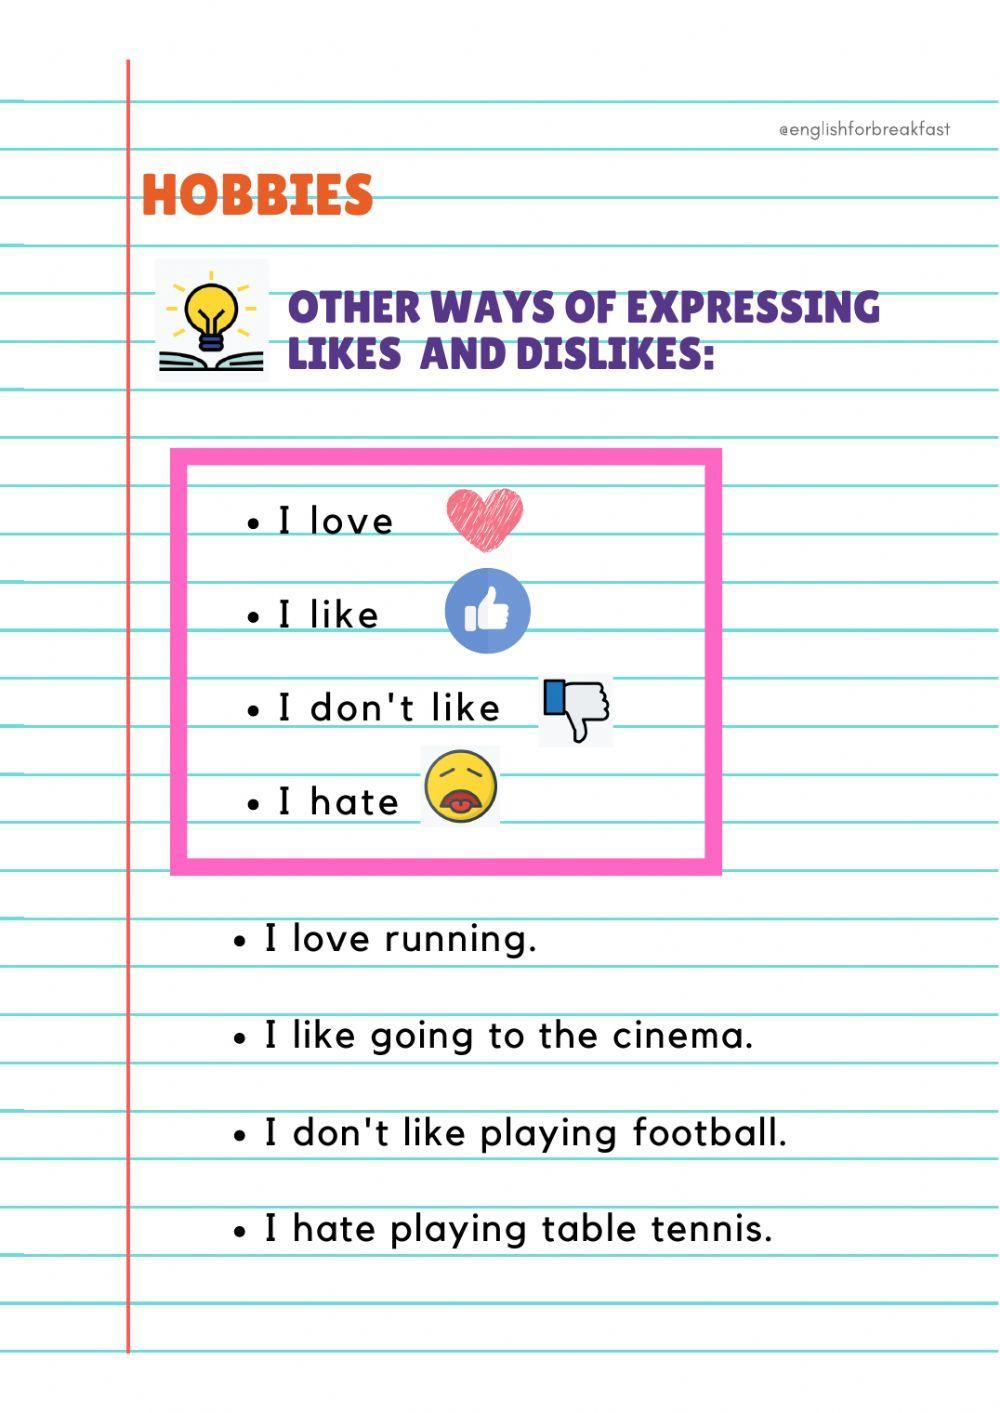 Grammar: expressing likes and dislikes. Hobbies